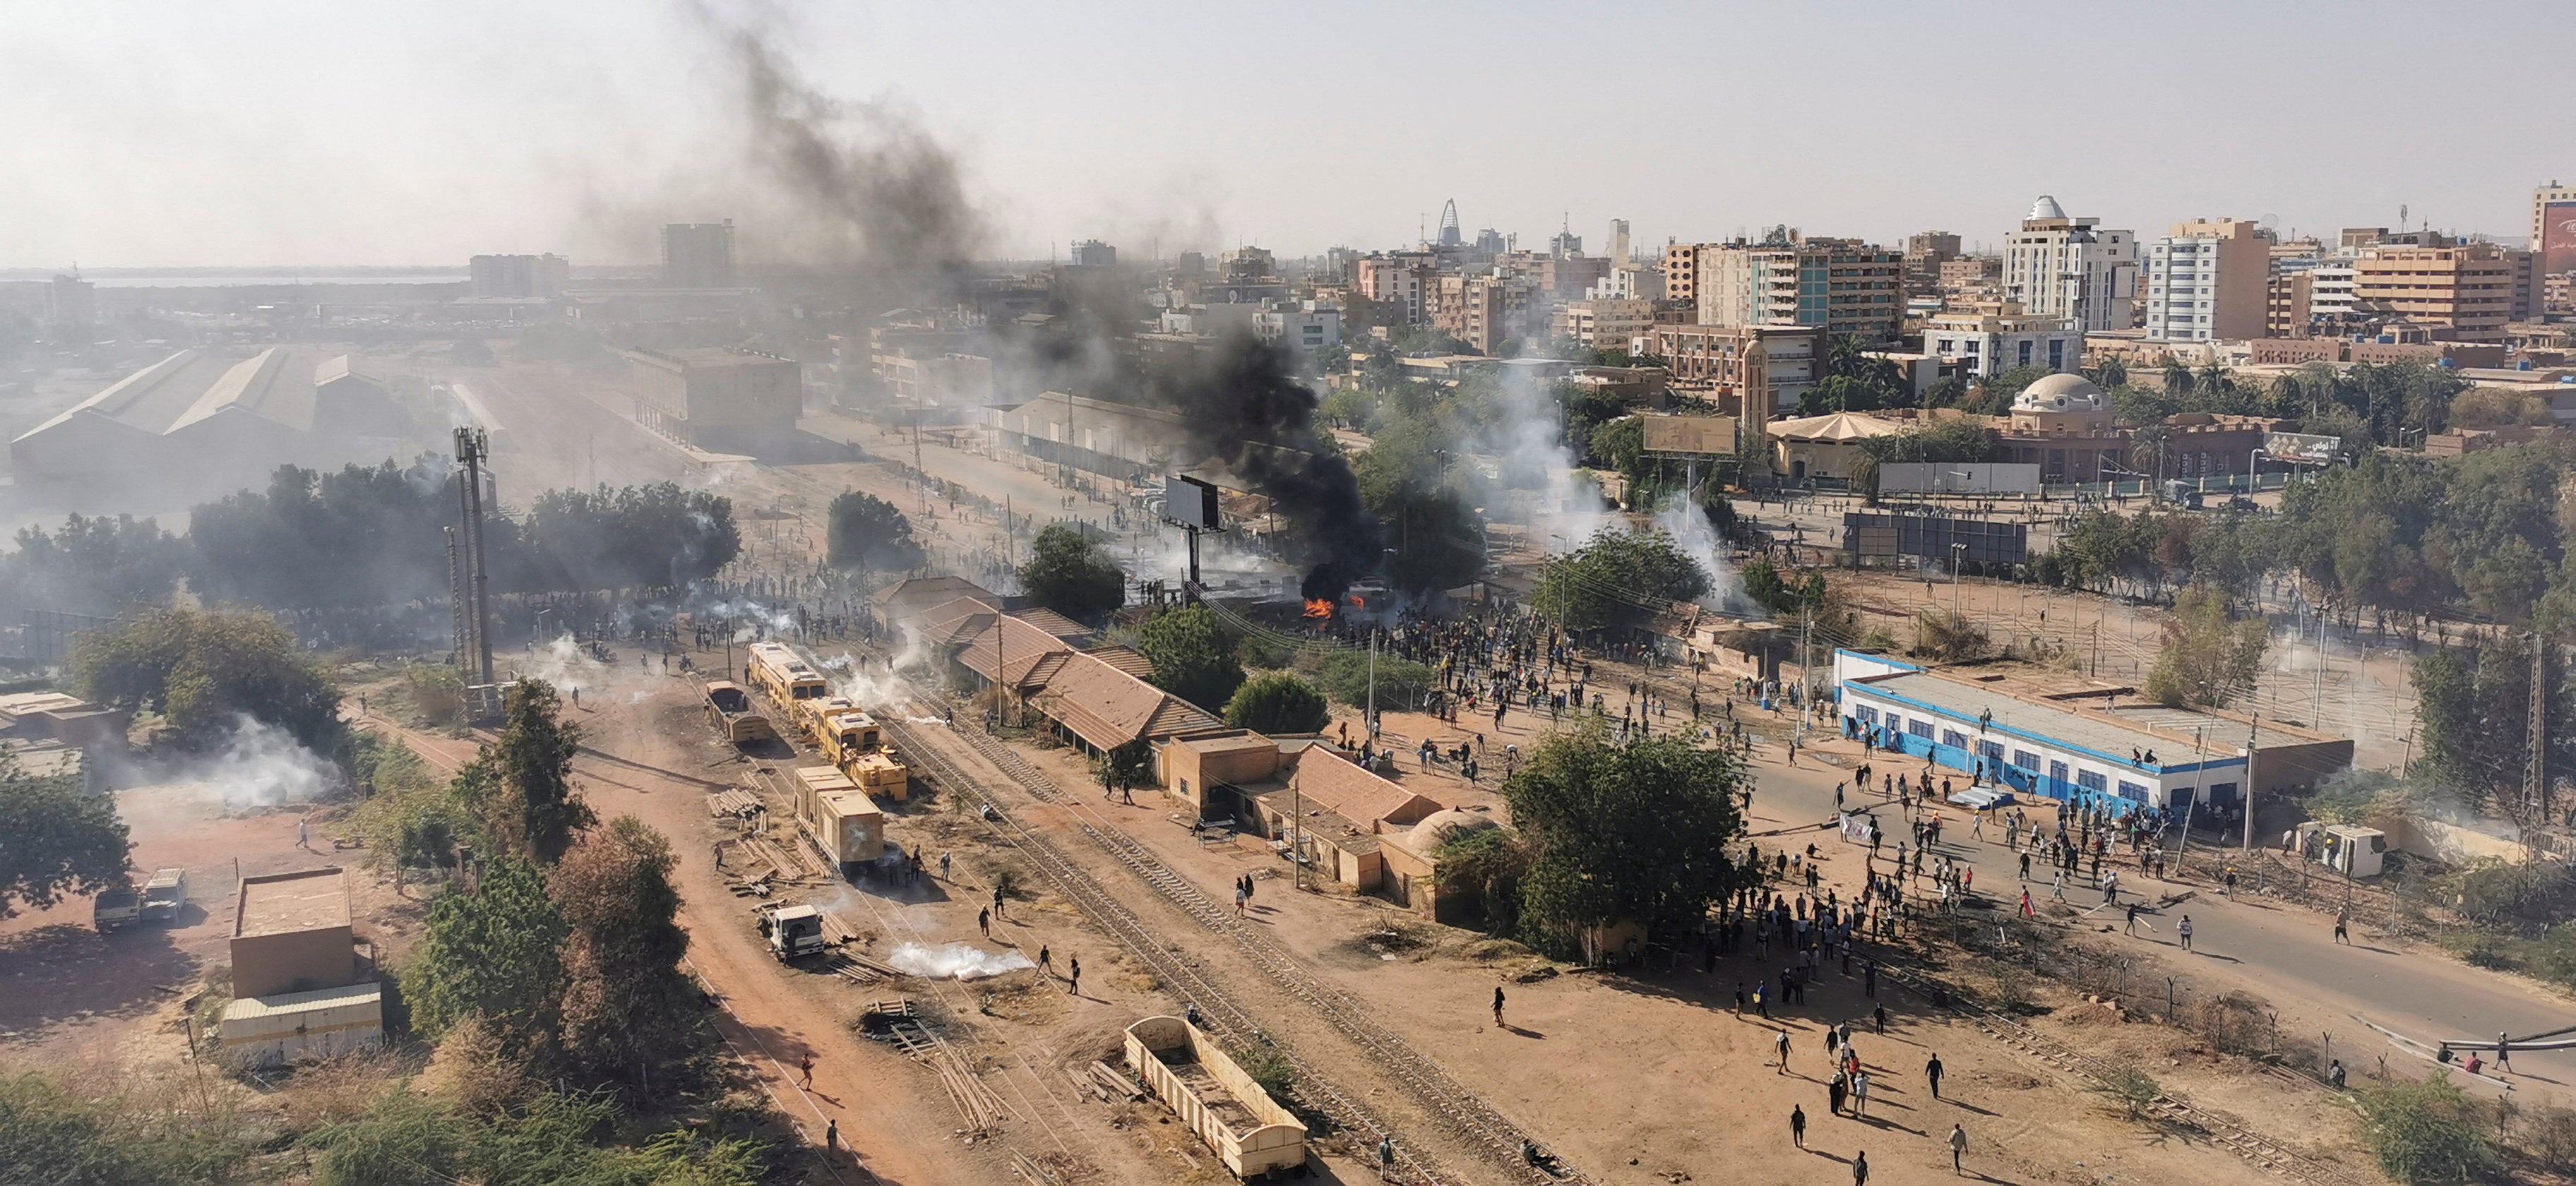 Protest against military rule, in Khartoum